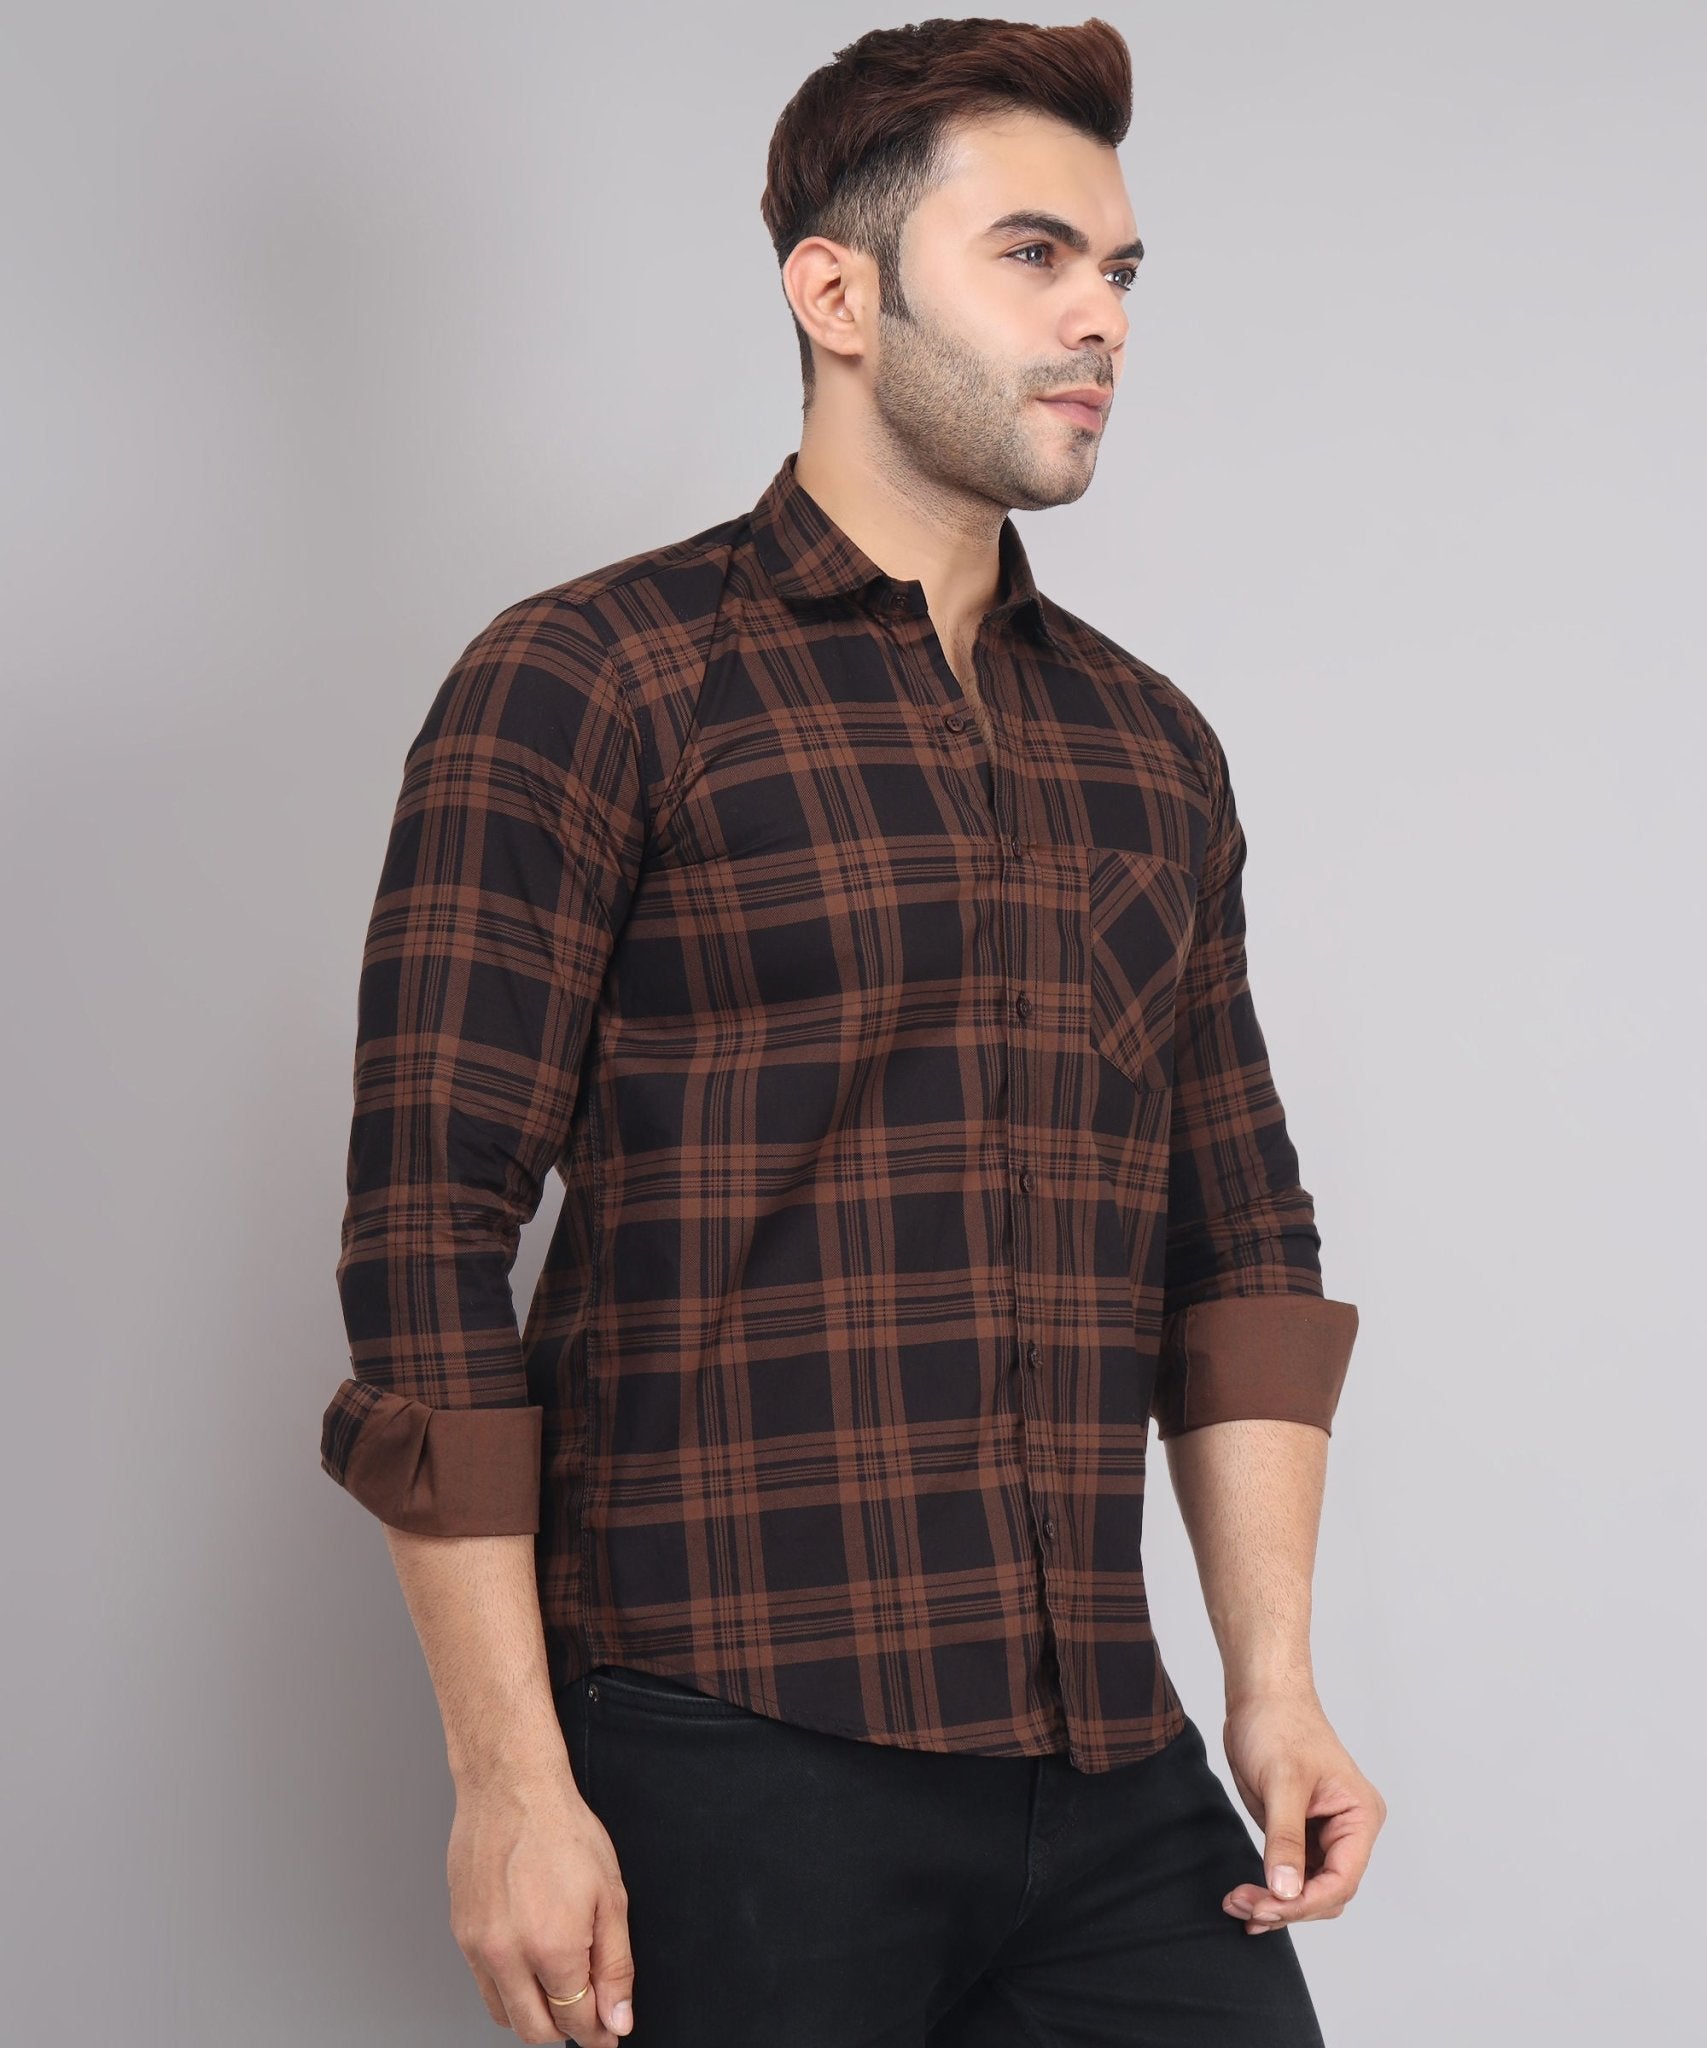 TryBuy Premium Robert Brown Black Checks Cotton Casual Shirts for Men - TryBuy® USA🇺🇸